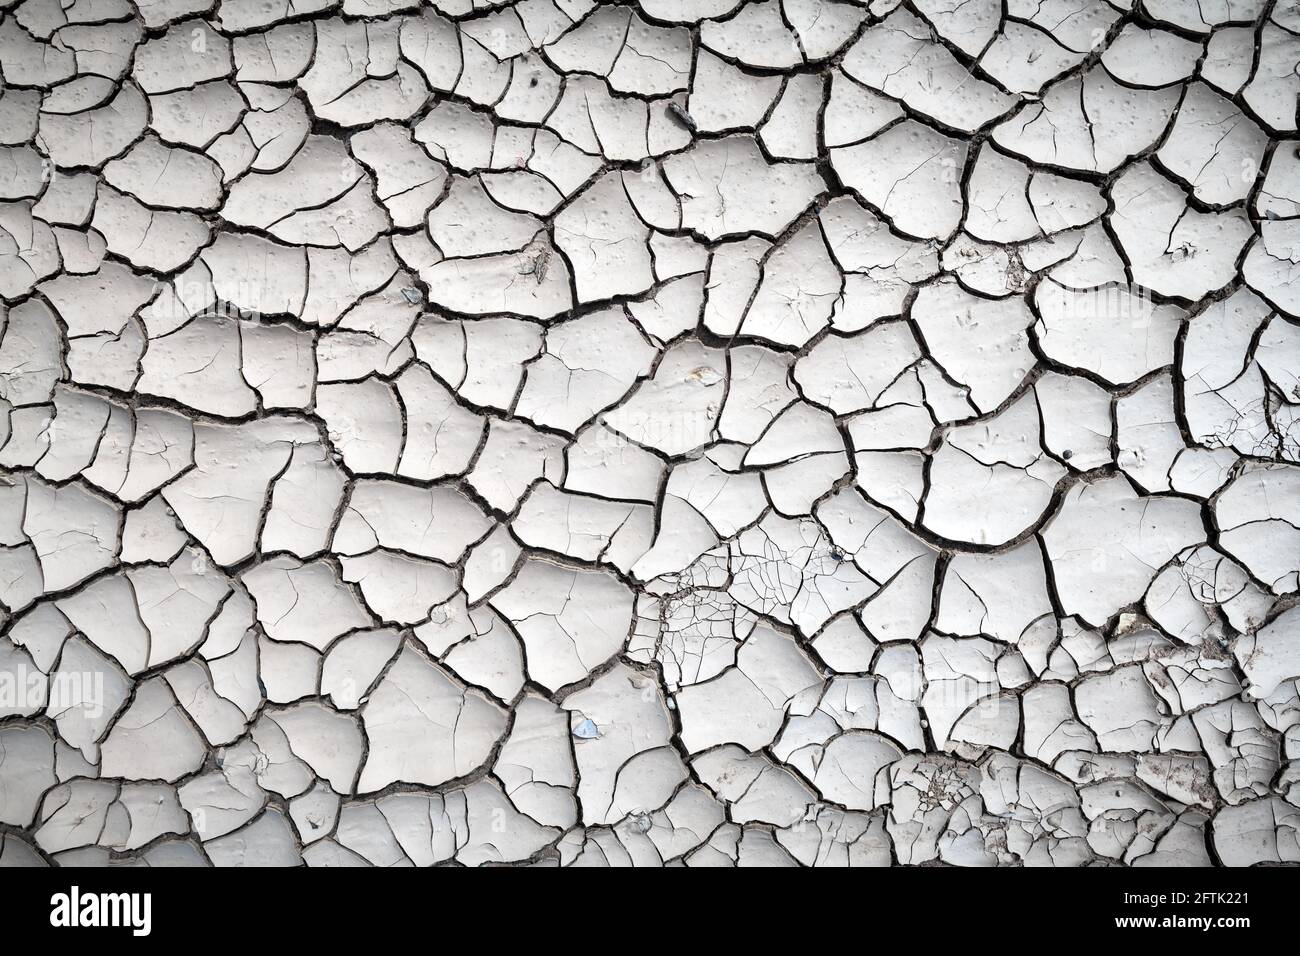 Cracked land texture close up Stock Photo